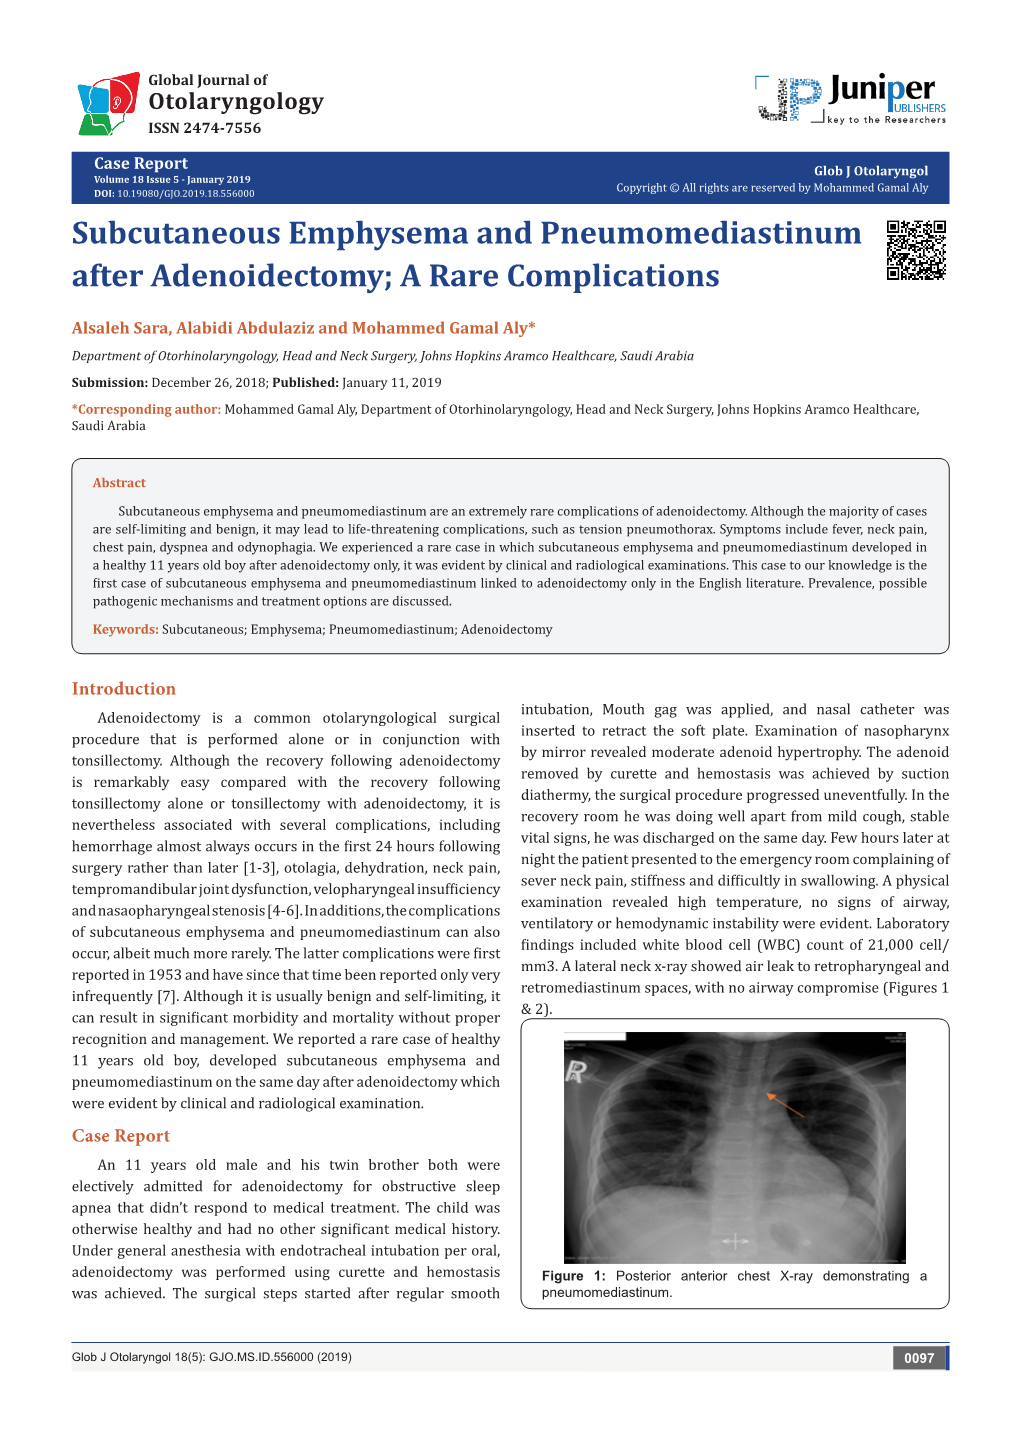 Subcutaneous Emphysema and Pneumomediastinum After Adenoidectomy; a Rare Complications